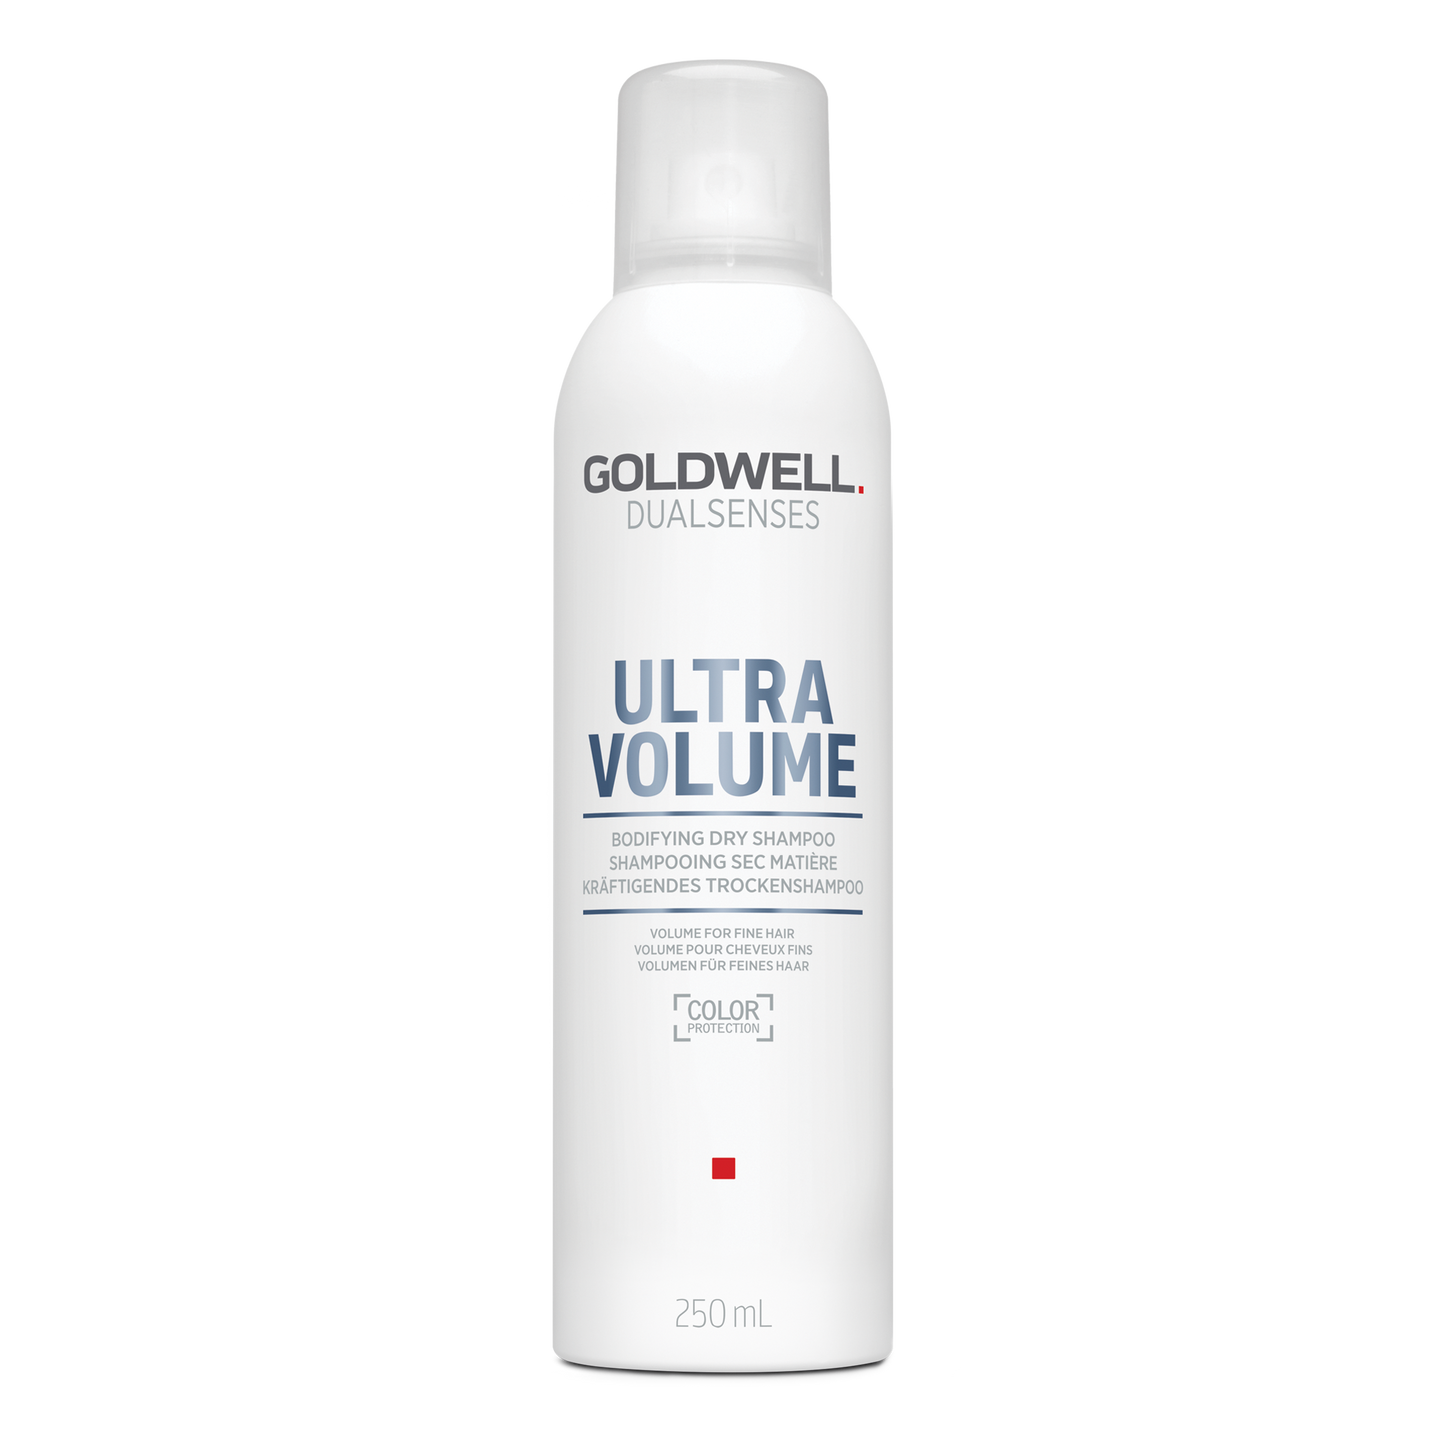 Dualsenses Ultra Volume Bodifying Dry Shampoo 250mL